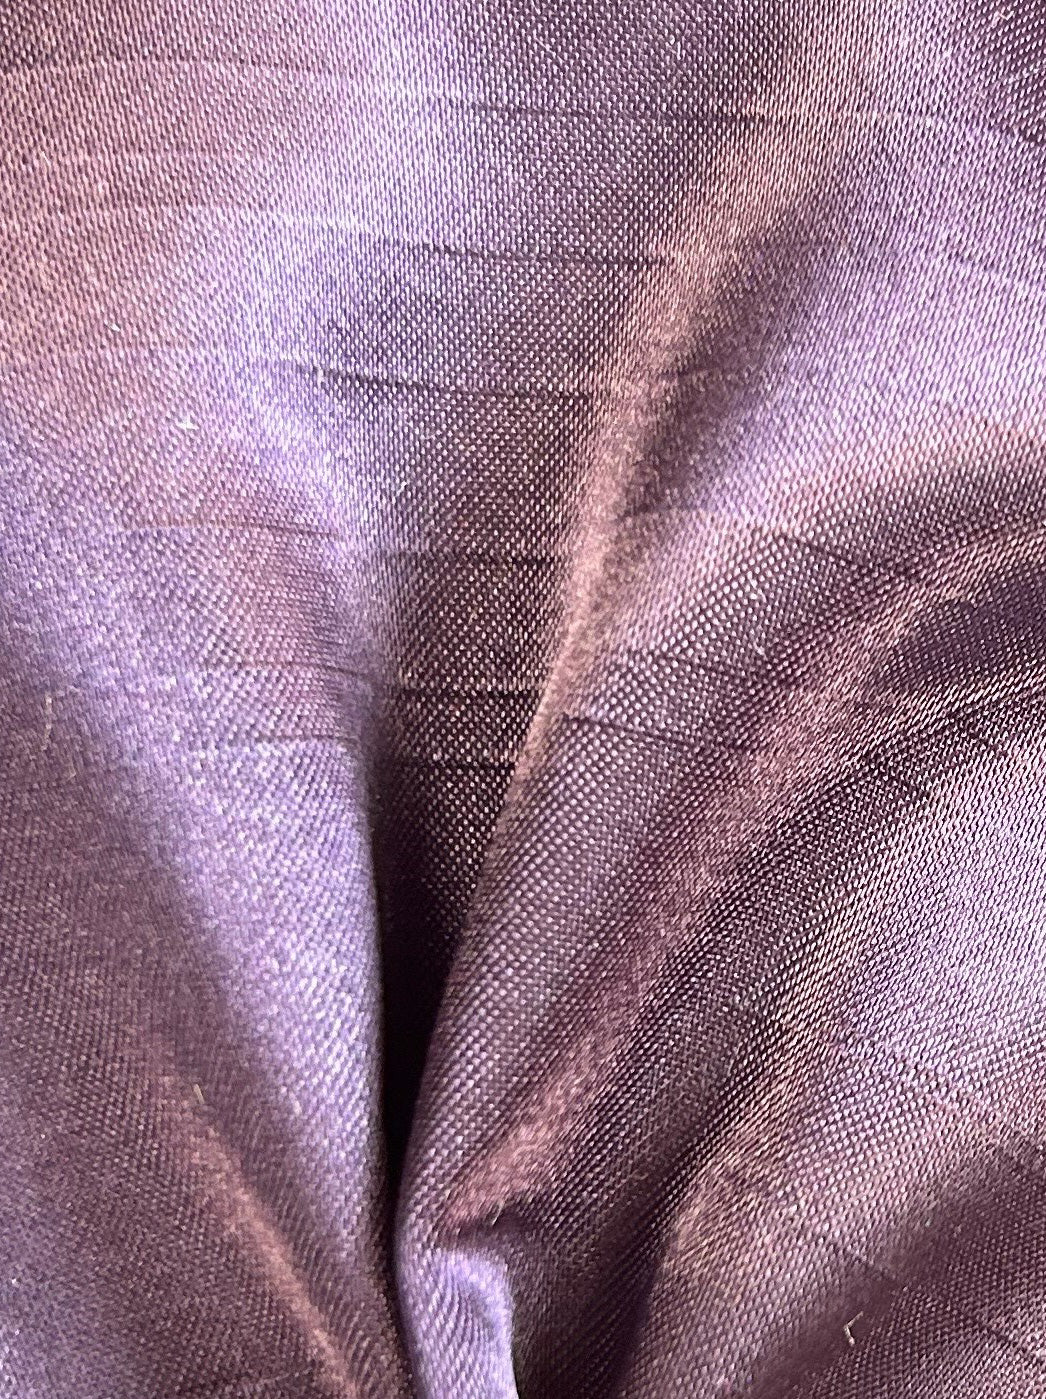 Dark Purple Polyester Satin Backed Dupion - Clarity